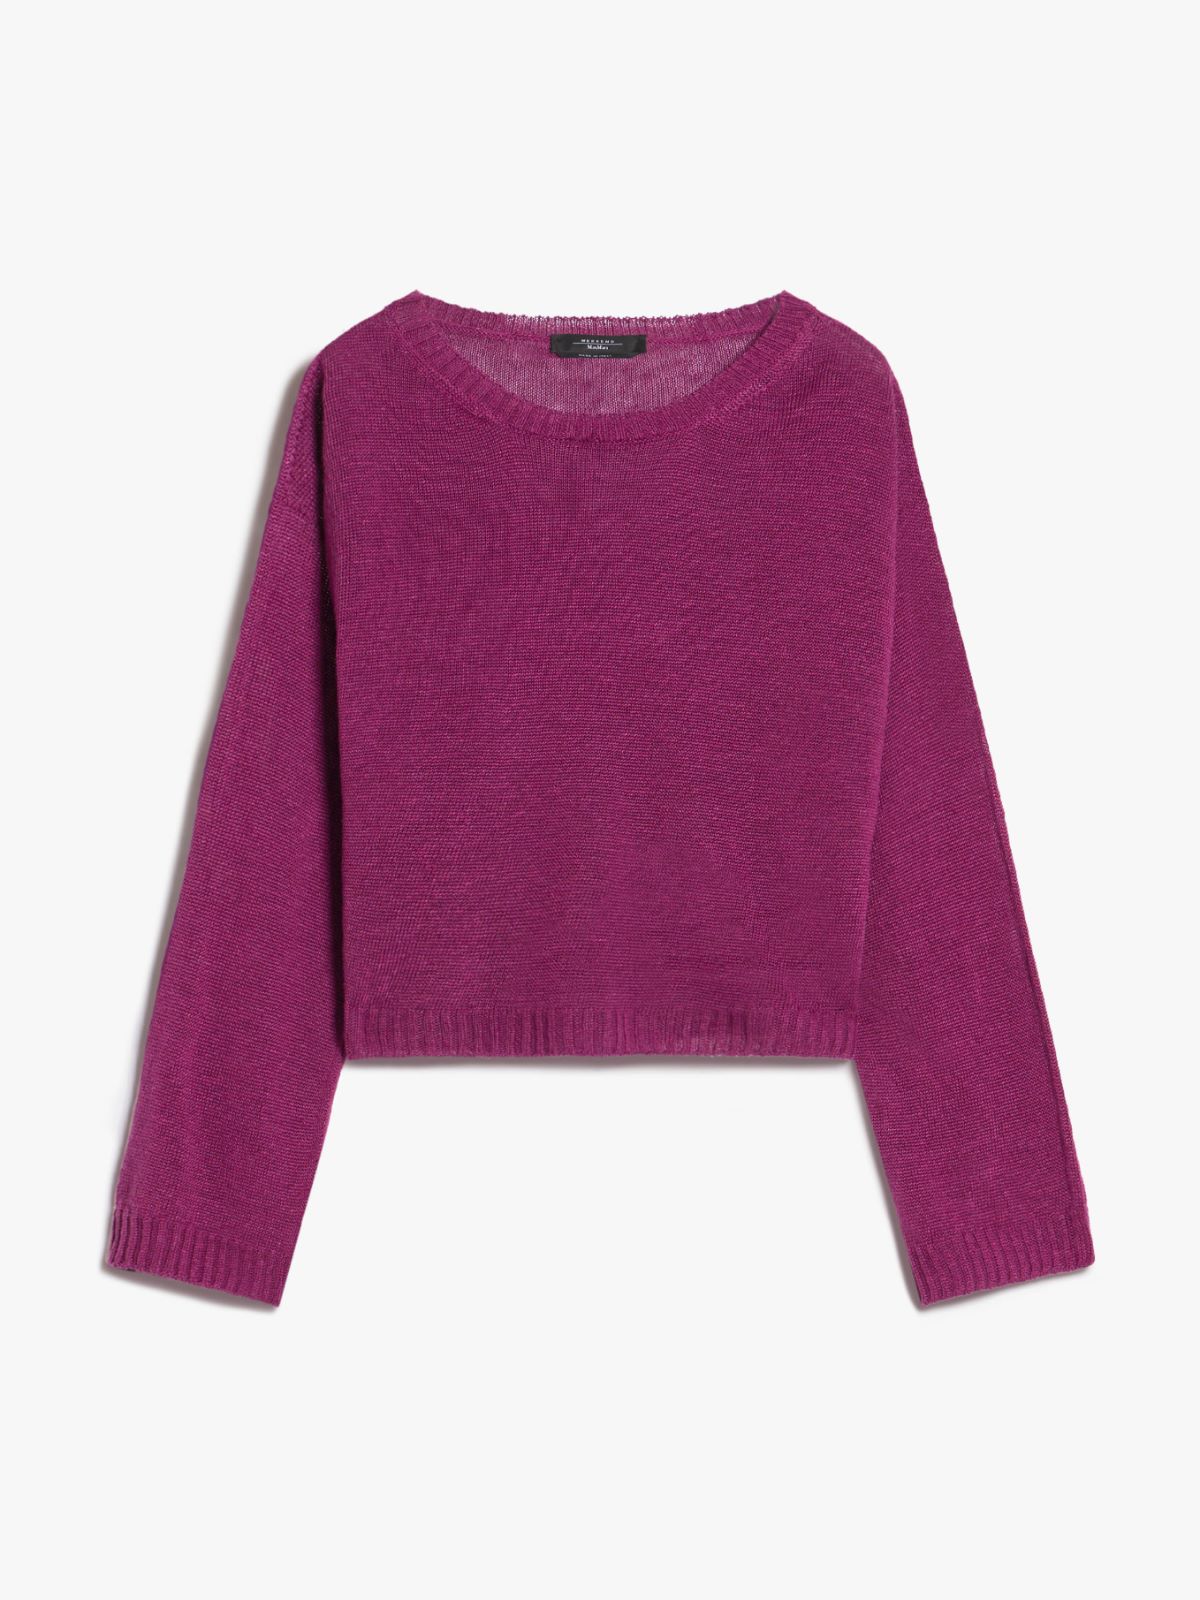 Linen yarn sweater, purple | Weekend Max Mara